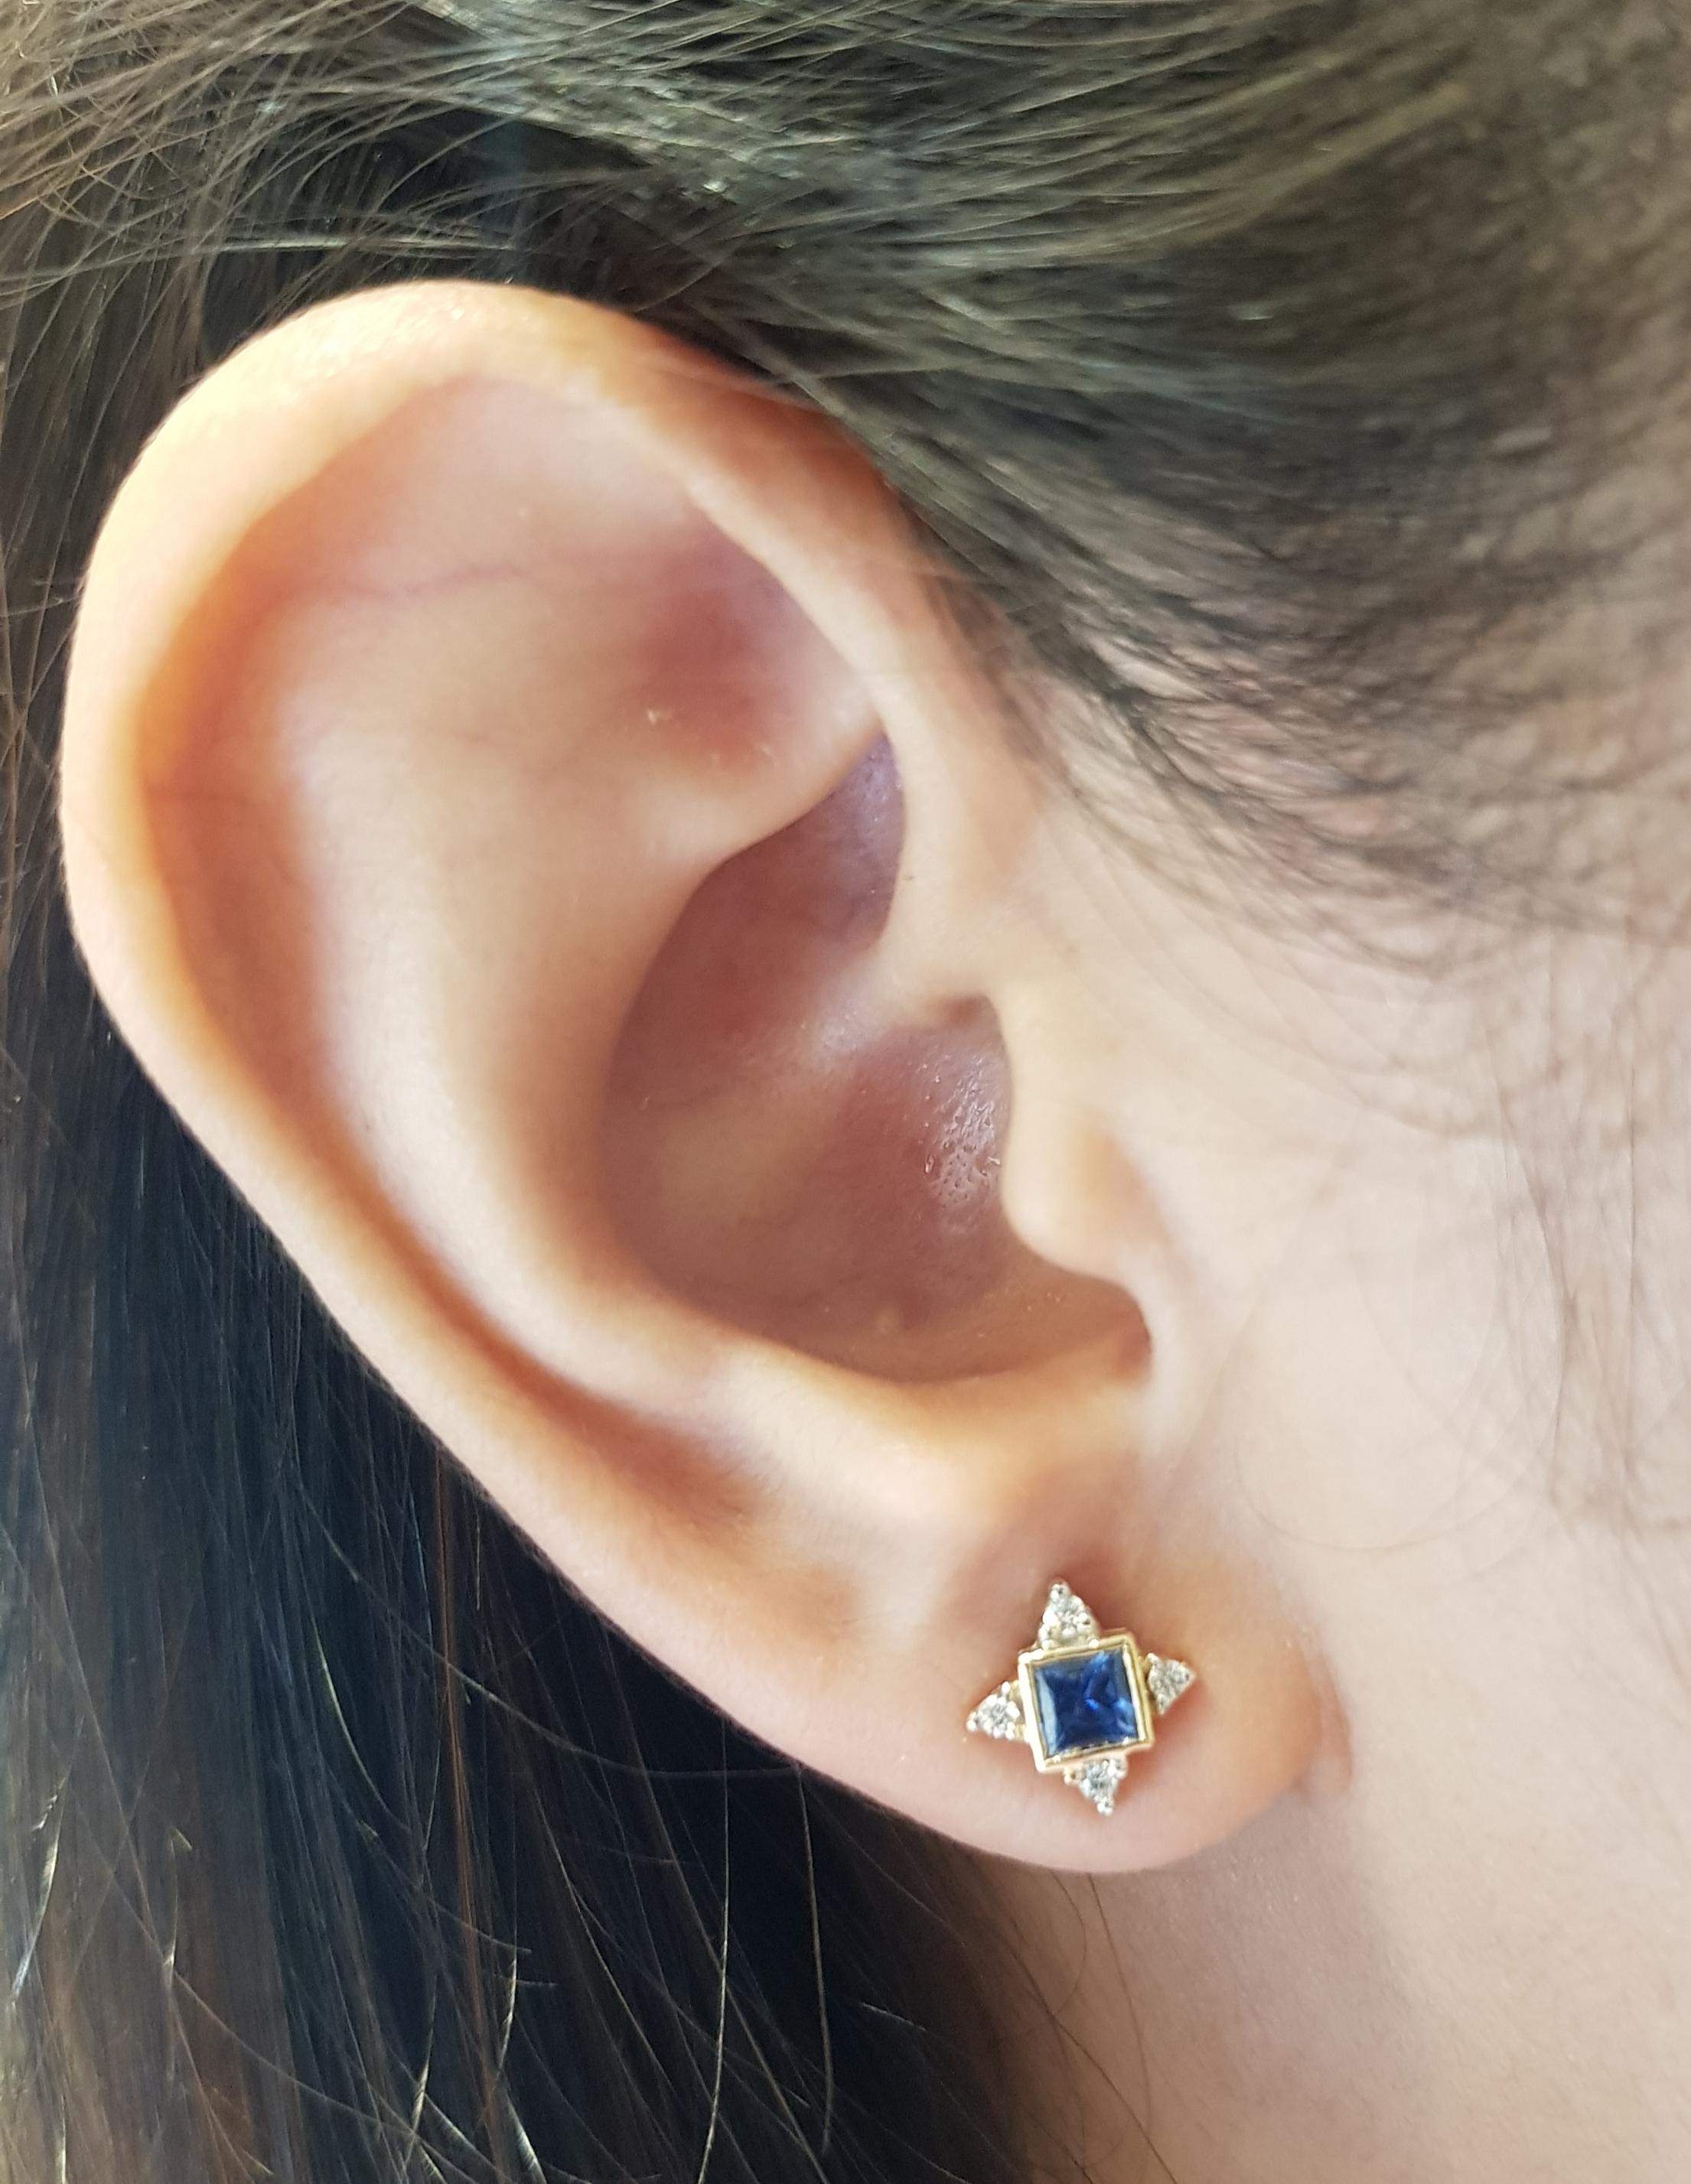 Blue Sapphire 0.51 carat with Diamond  0.08 carat Earrings set in 18 Karat Gold Settings

Width:  0.9 cm 
Length:  0.9 cm
Total Weight: 2.13 grams

